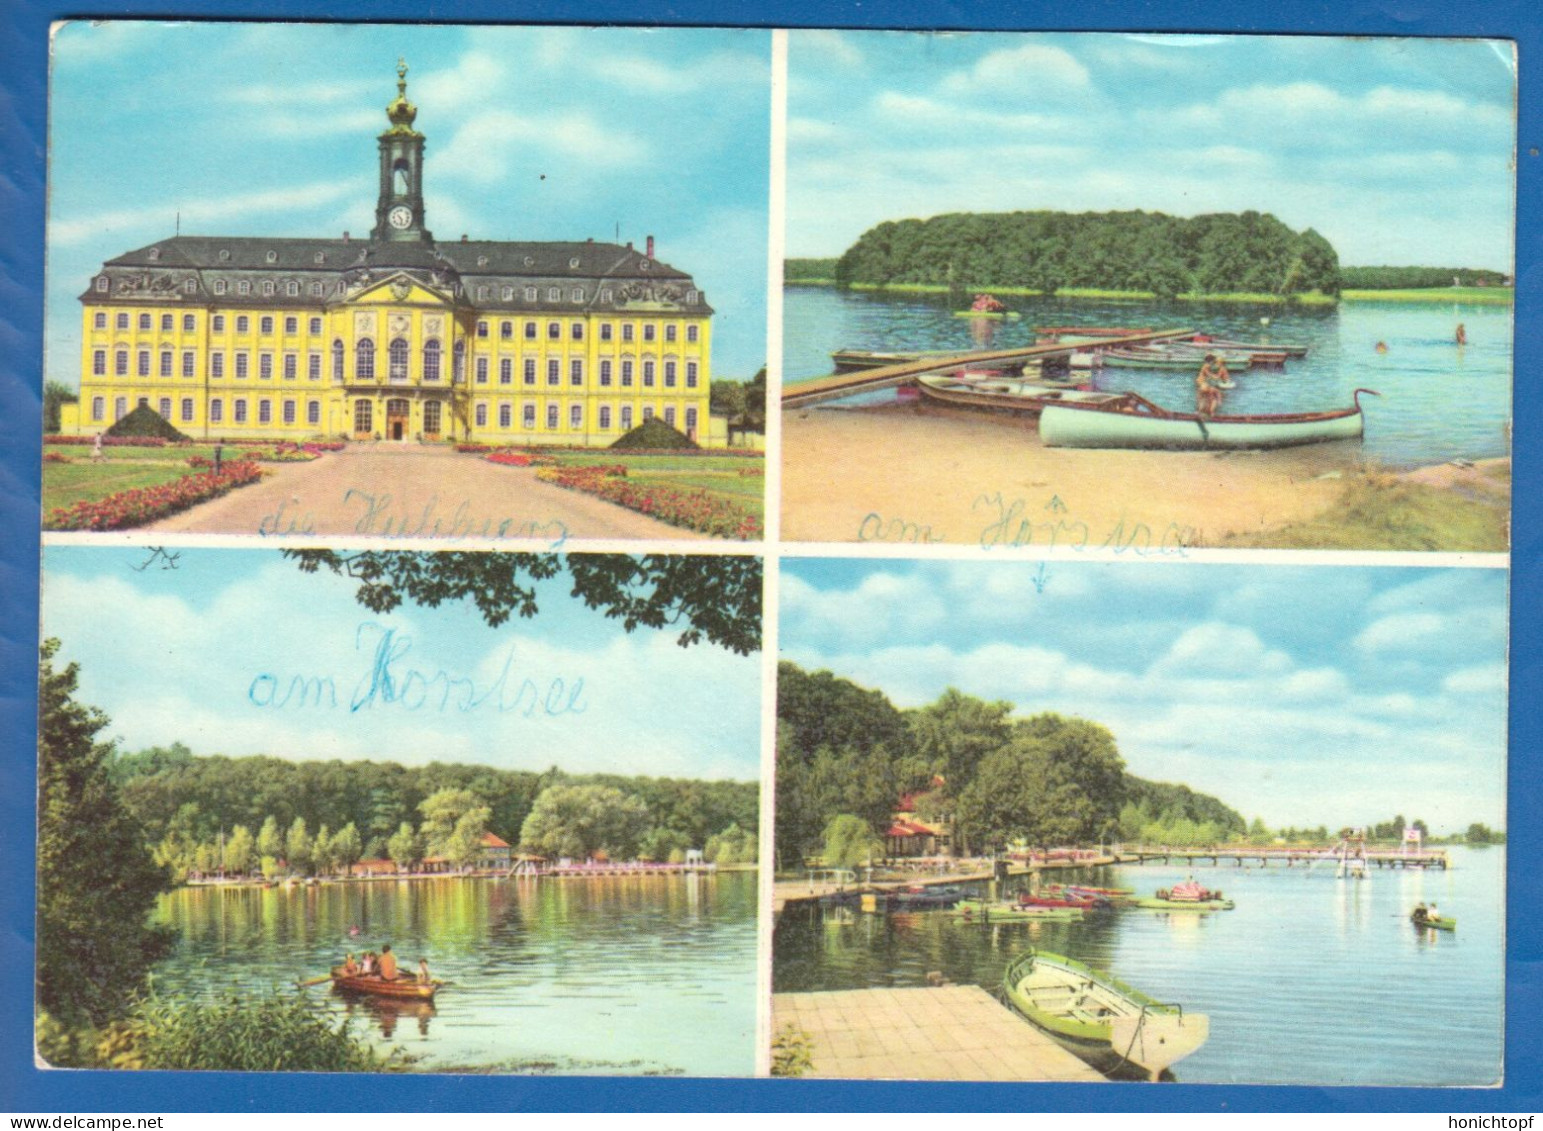 Deutschland; Wermsdorf; Bad Horstsee; Hubertusburg Und Horstseebad; 1967 - Wermsdorf